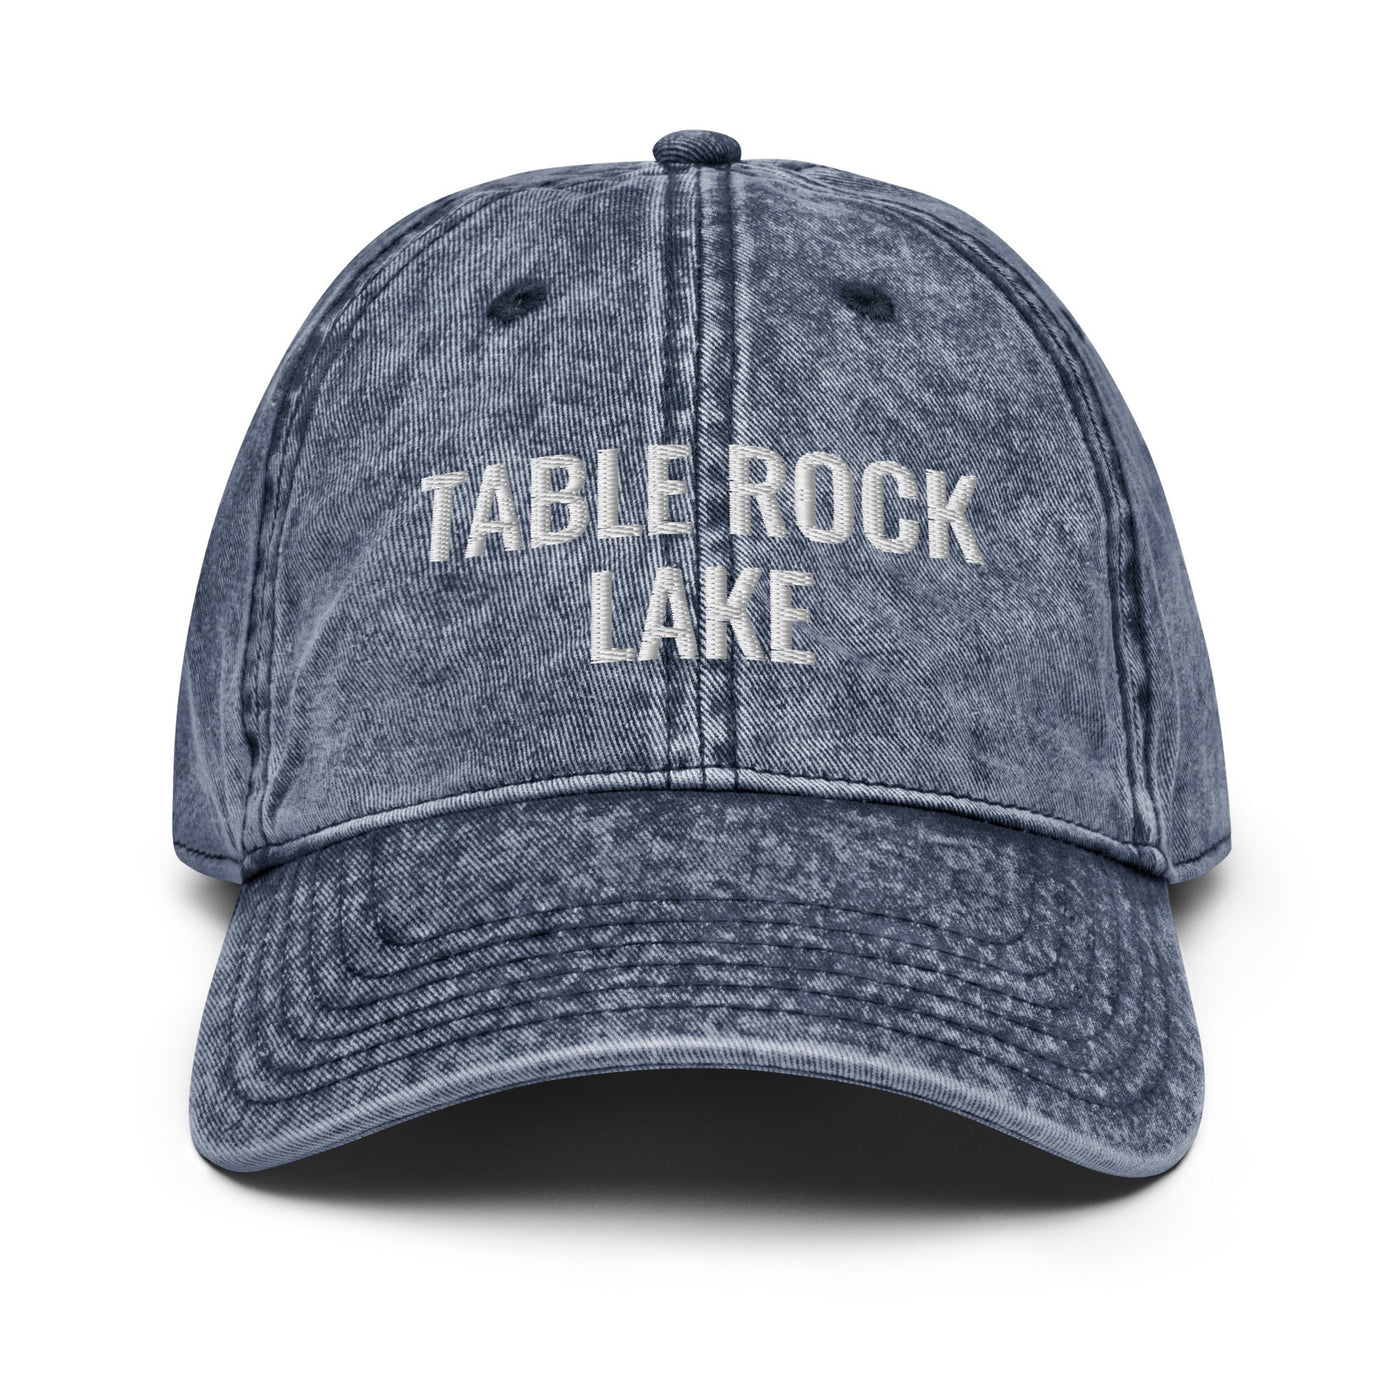 Table Rock Lake Hat - Ezra's Clothing